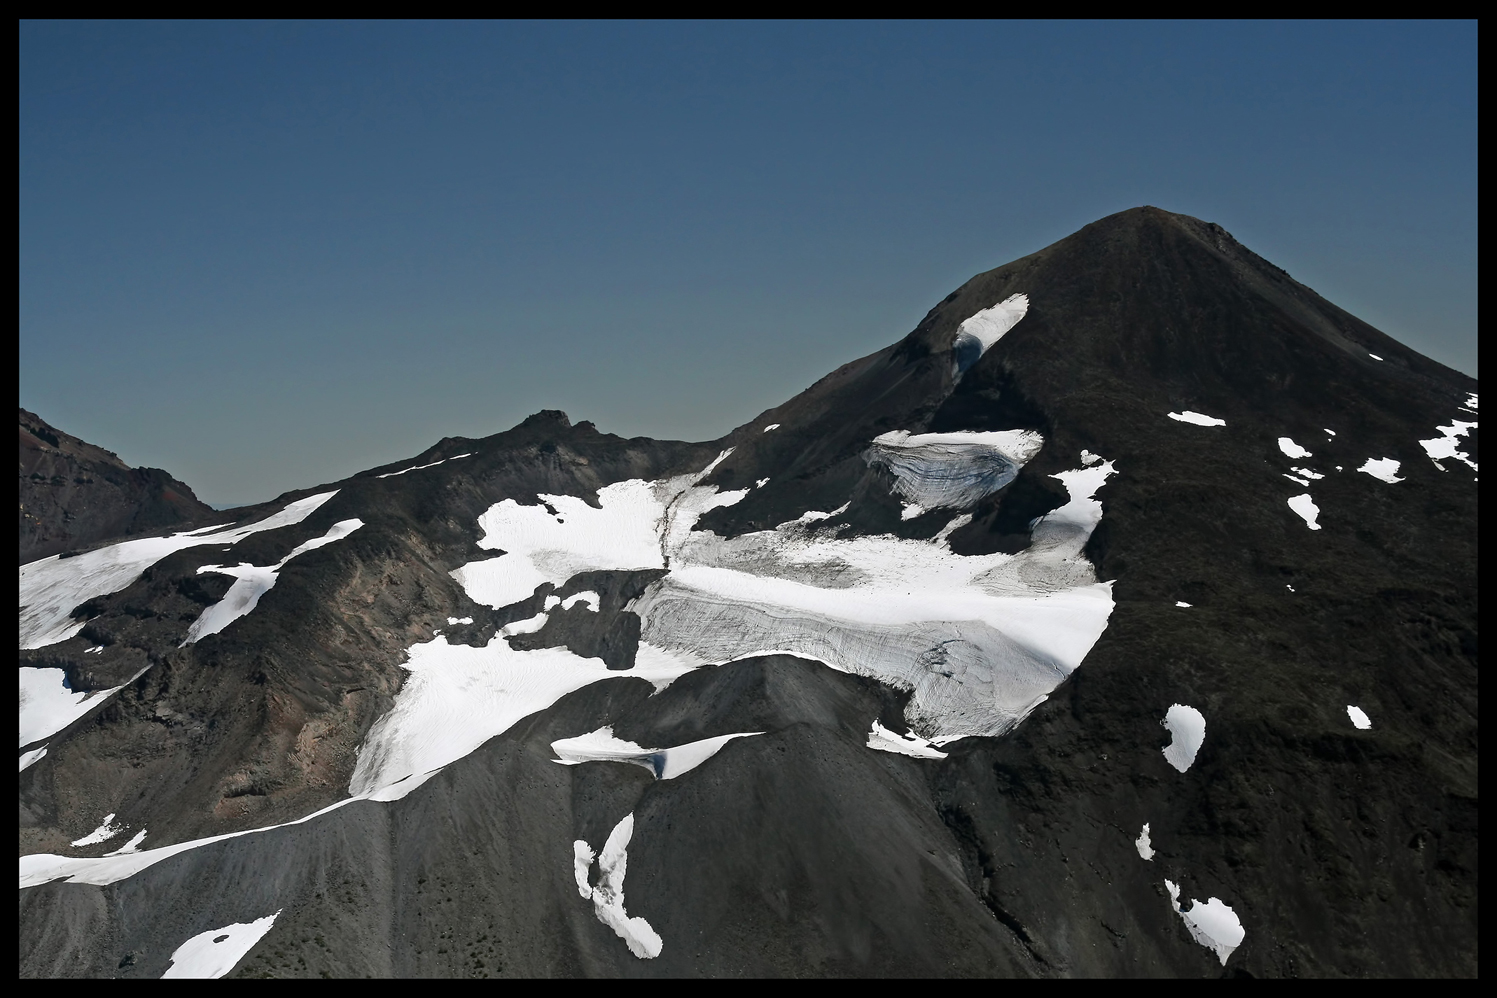 Renfrew Glacier, photo courtesy of John Scurlock